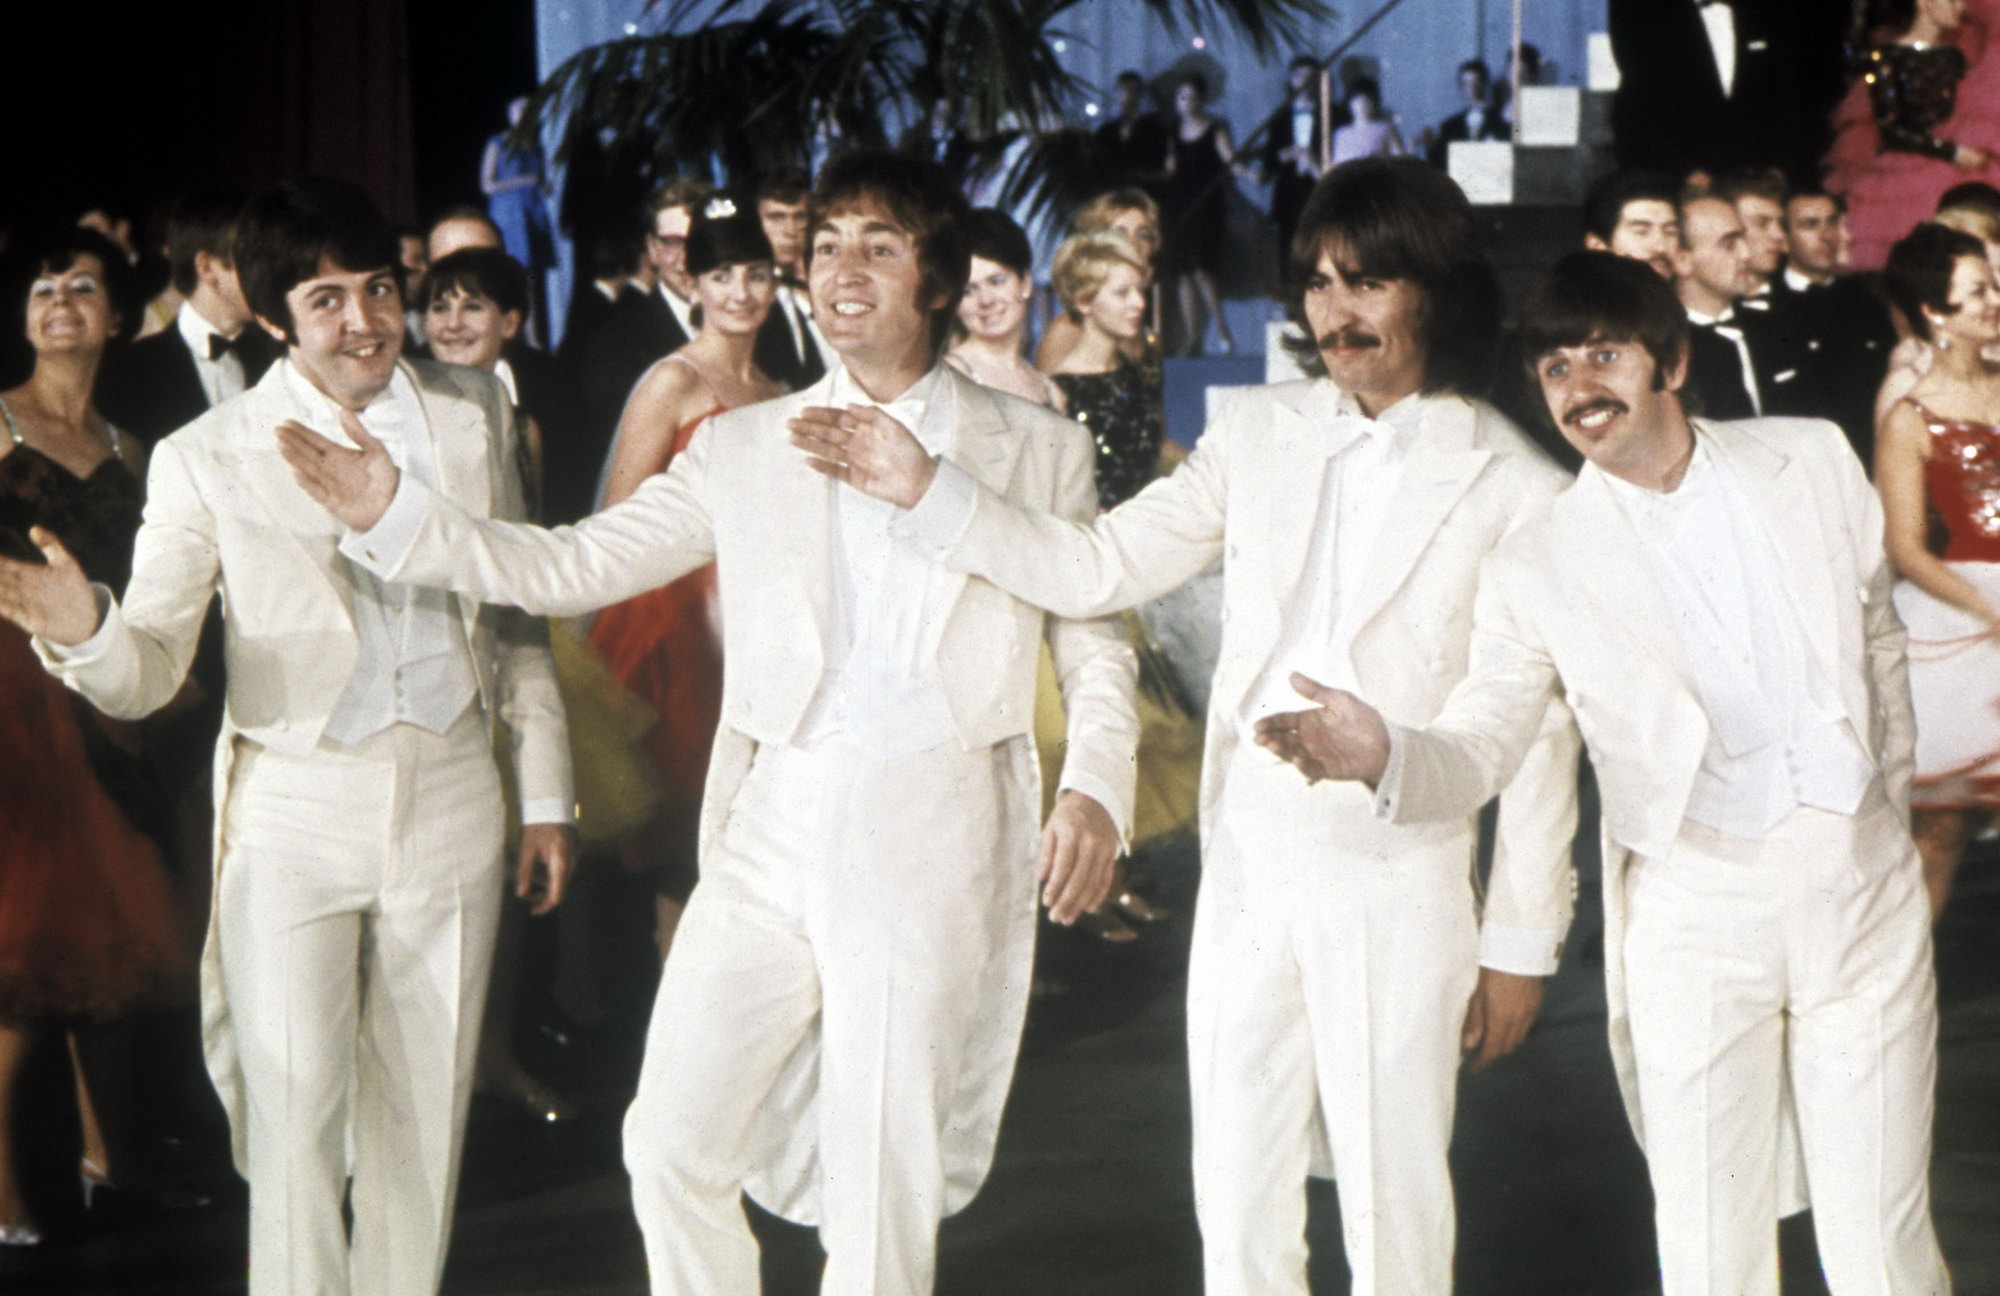 People 2000x1296 The Beatles John Lennon Paul McCartney George Harrison Ringo Starr band rock bands tuxedo smiling music musician men